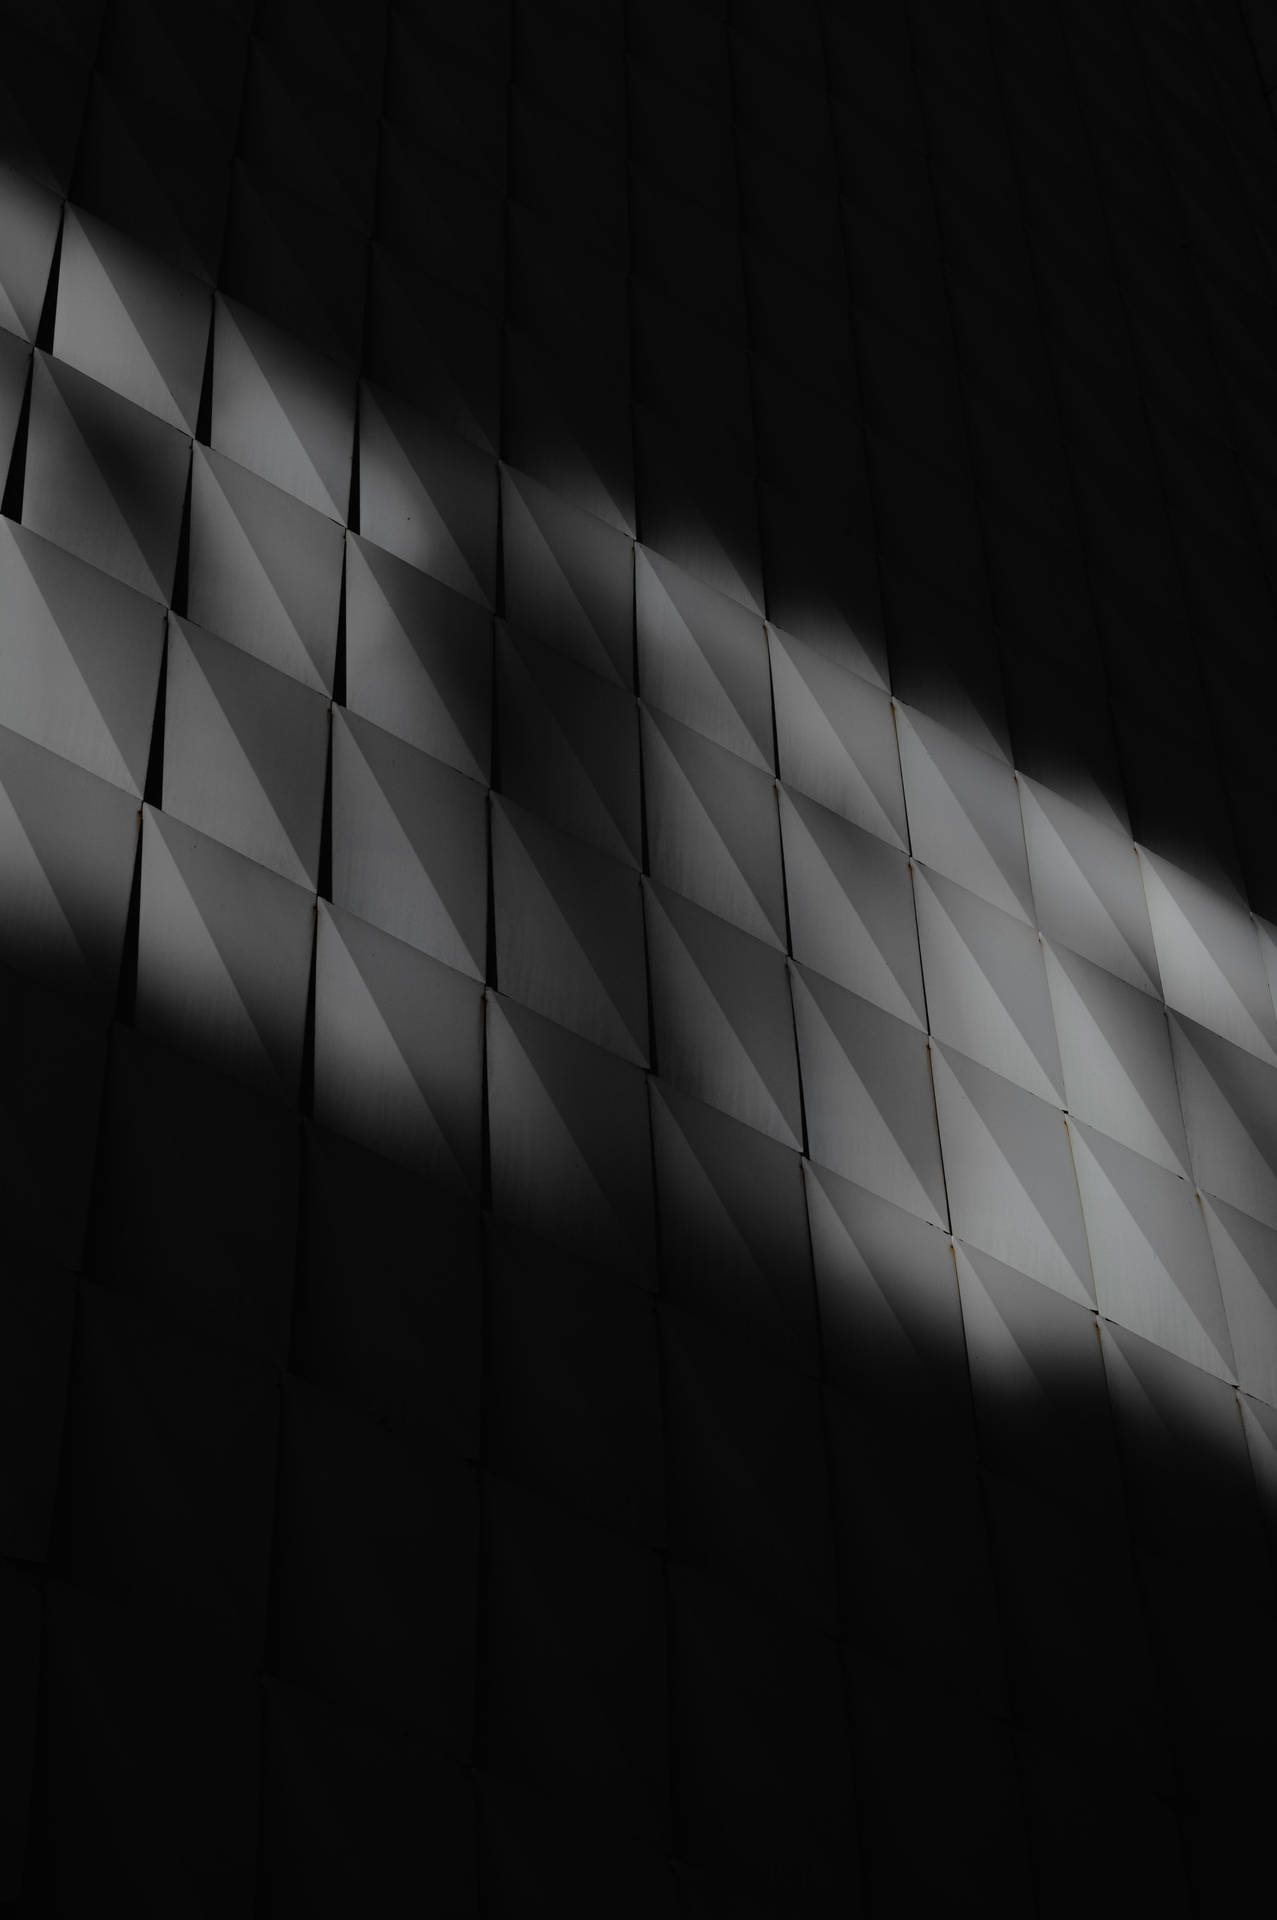 Shadowy Dark Wall Of Squares Wallpaper